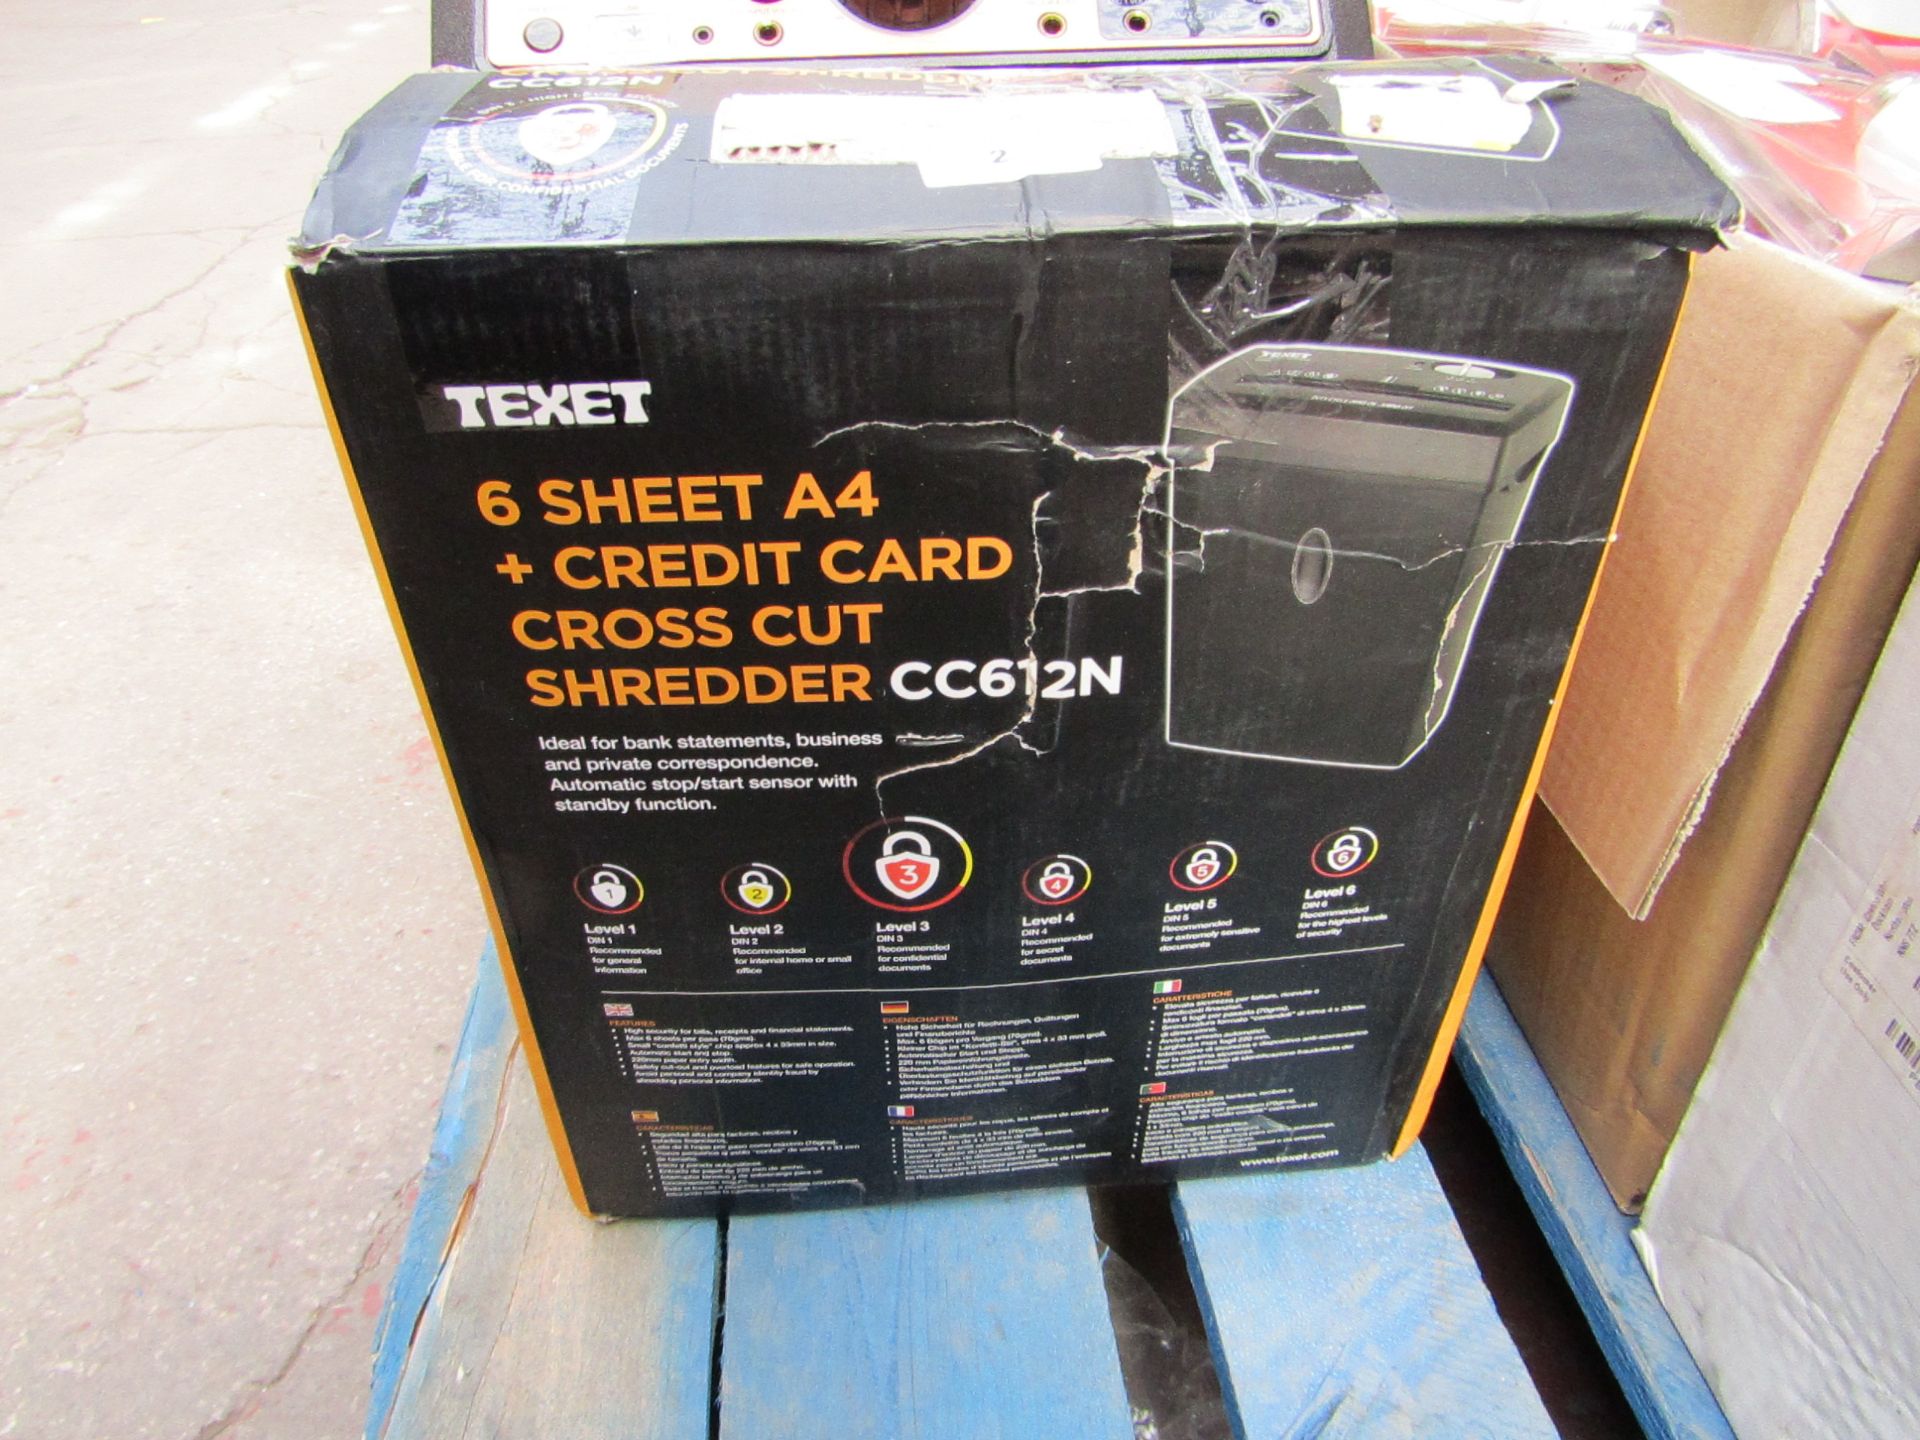 Texet - 6 Sheet A4 + Credit Card Crosscut Shredder ( CC612N ) - Untested & Boxed.